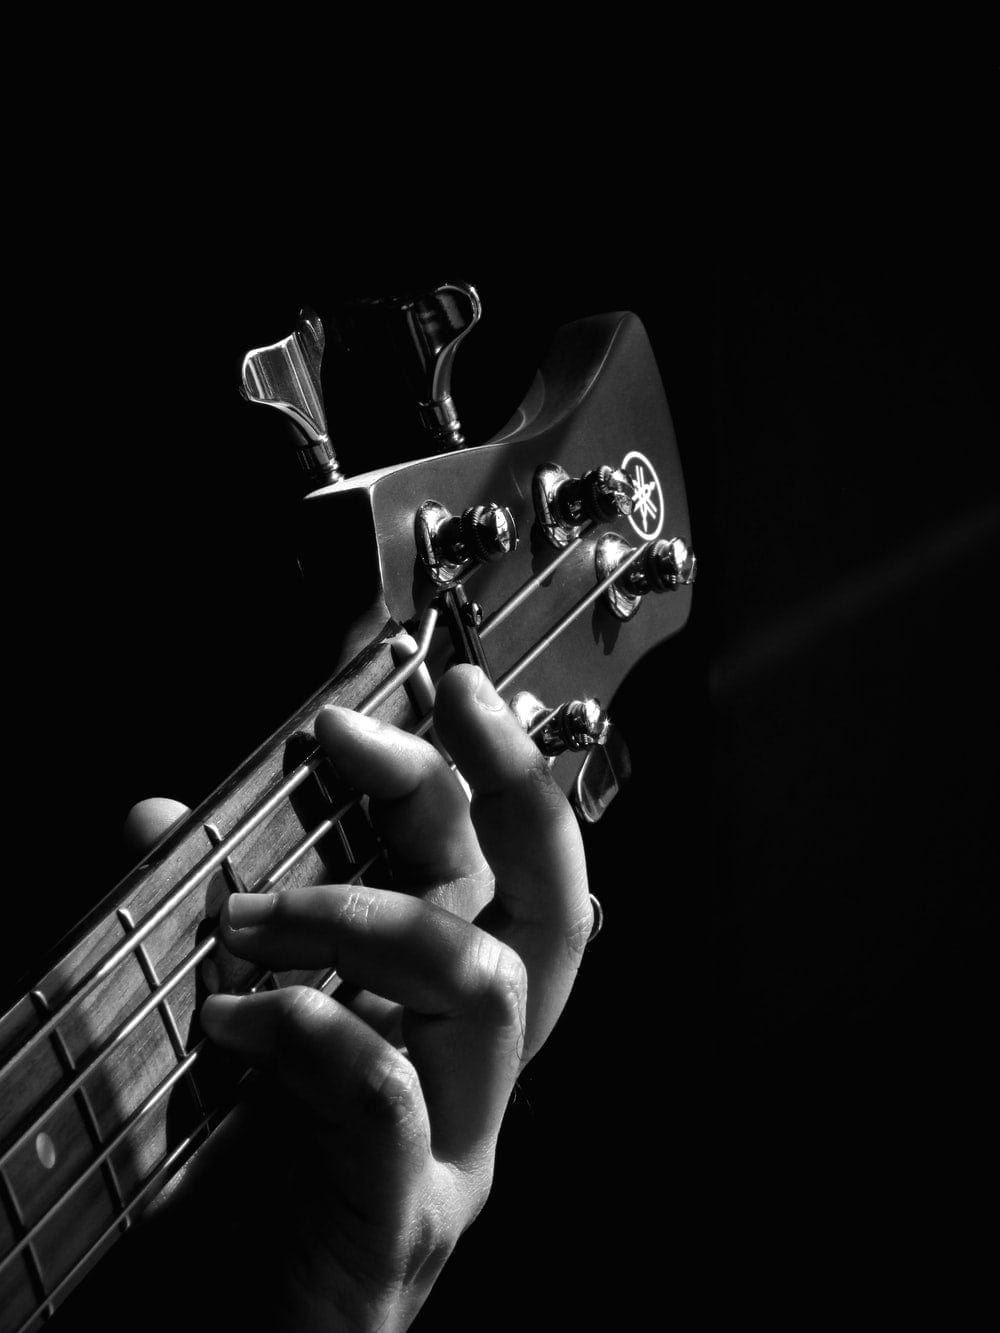 Cross Stitch | Bass - Person Playing Guitar Grayscale Photo - Cross Stitched